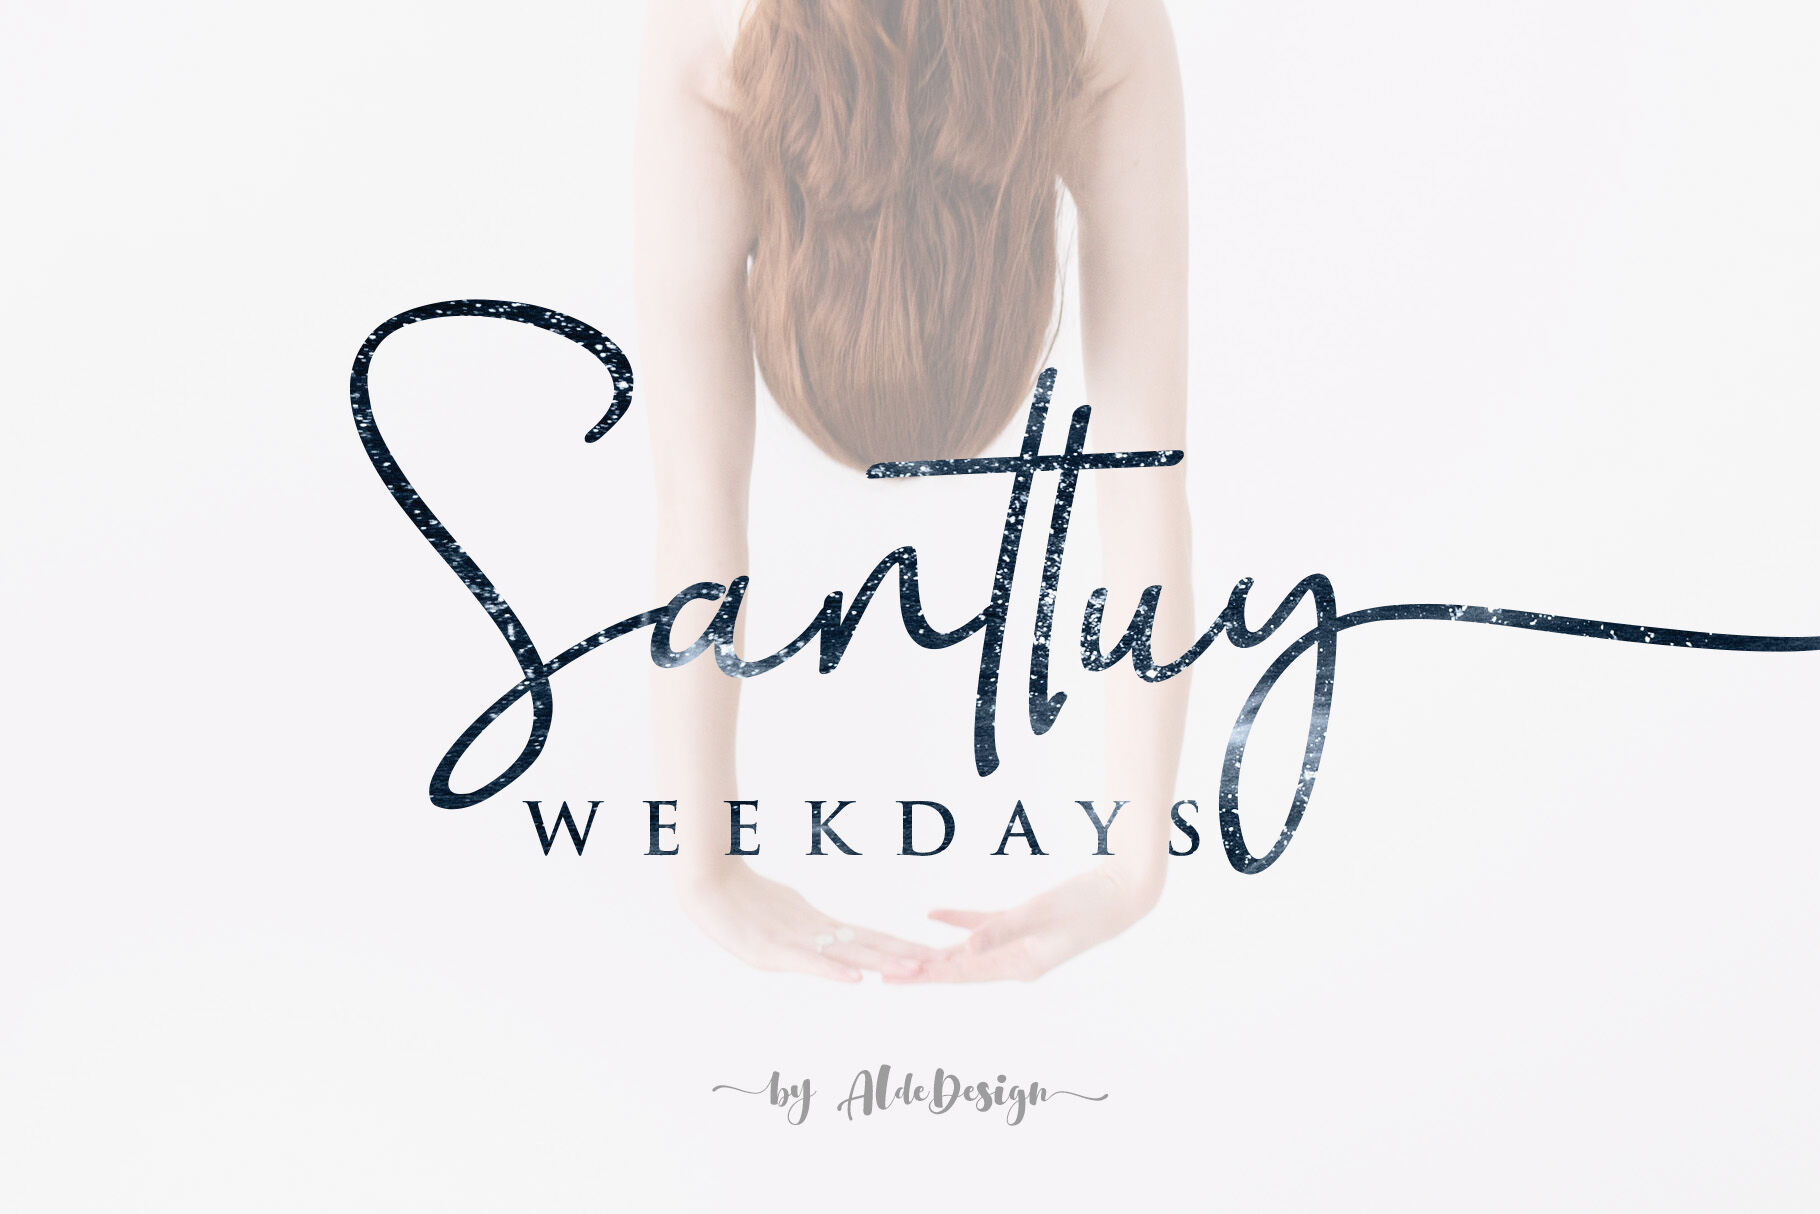 Weekdays Santtuy By Aldedesign Thehungryjpeg Com